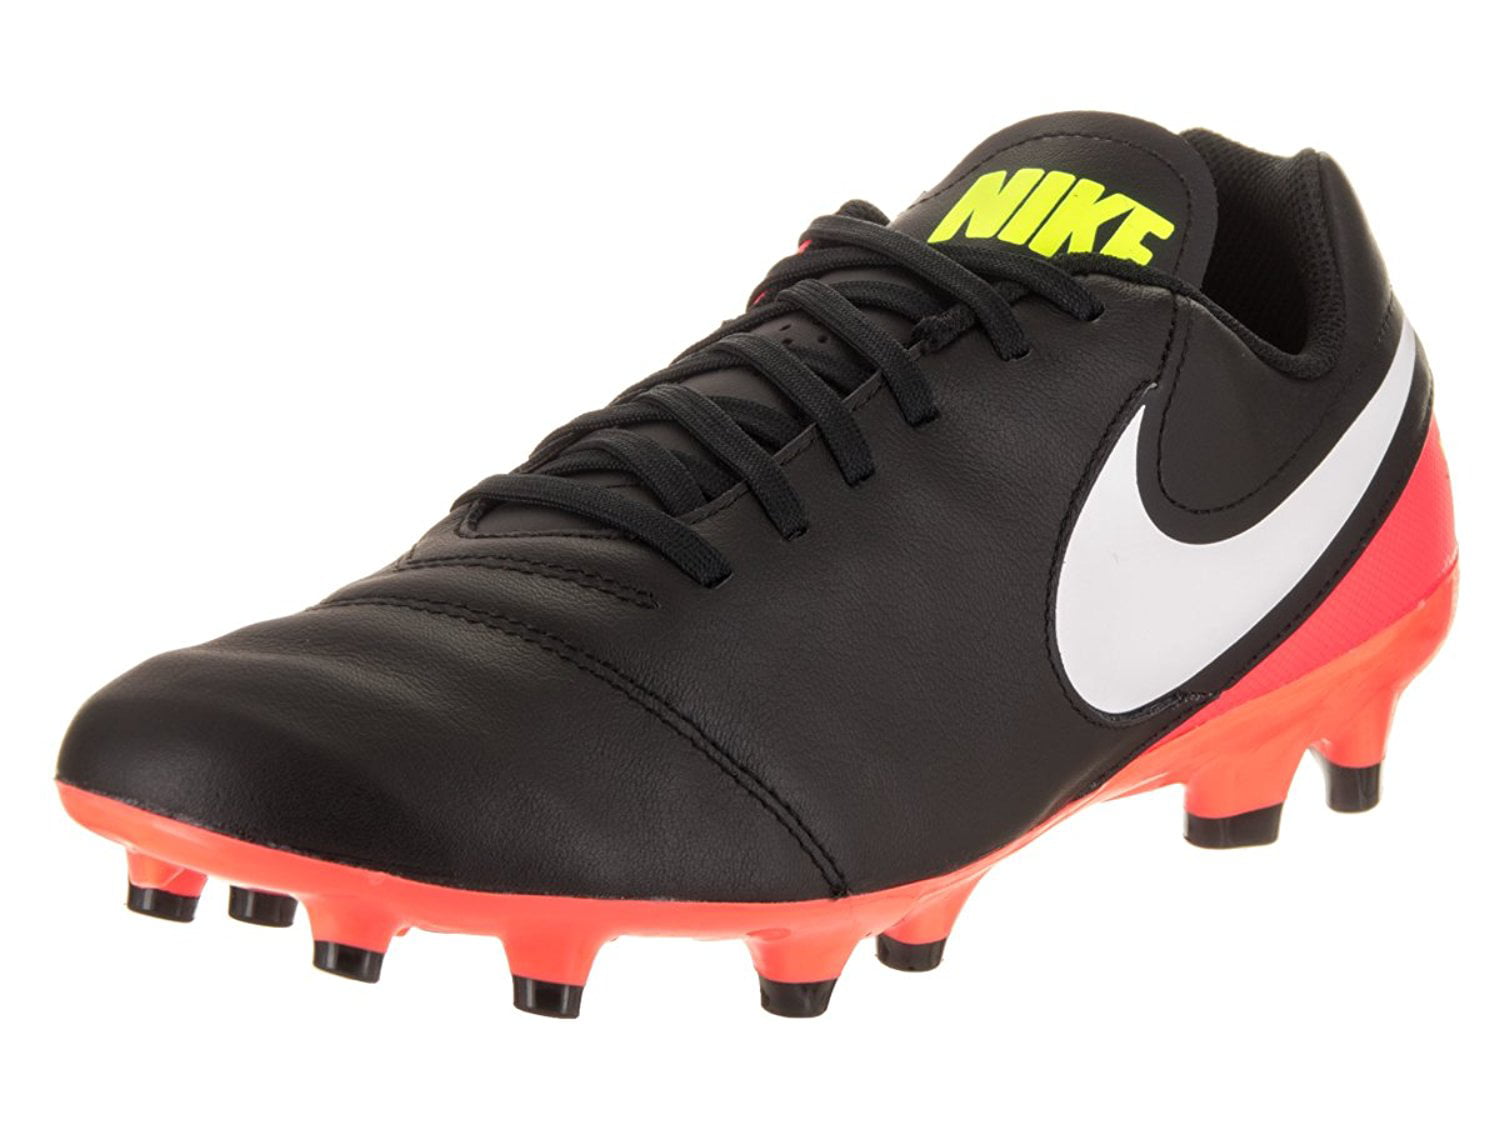 Nike Tiempo Leather Fg Soccer Cleats - Walmart.com